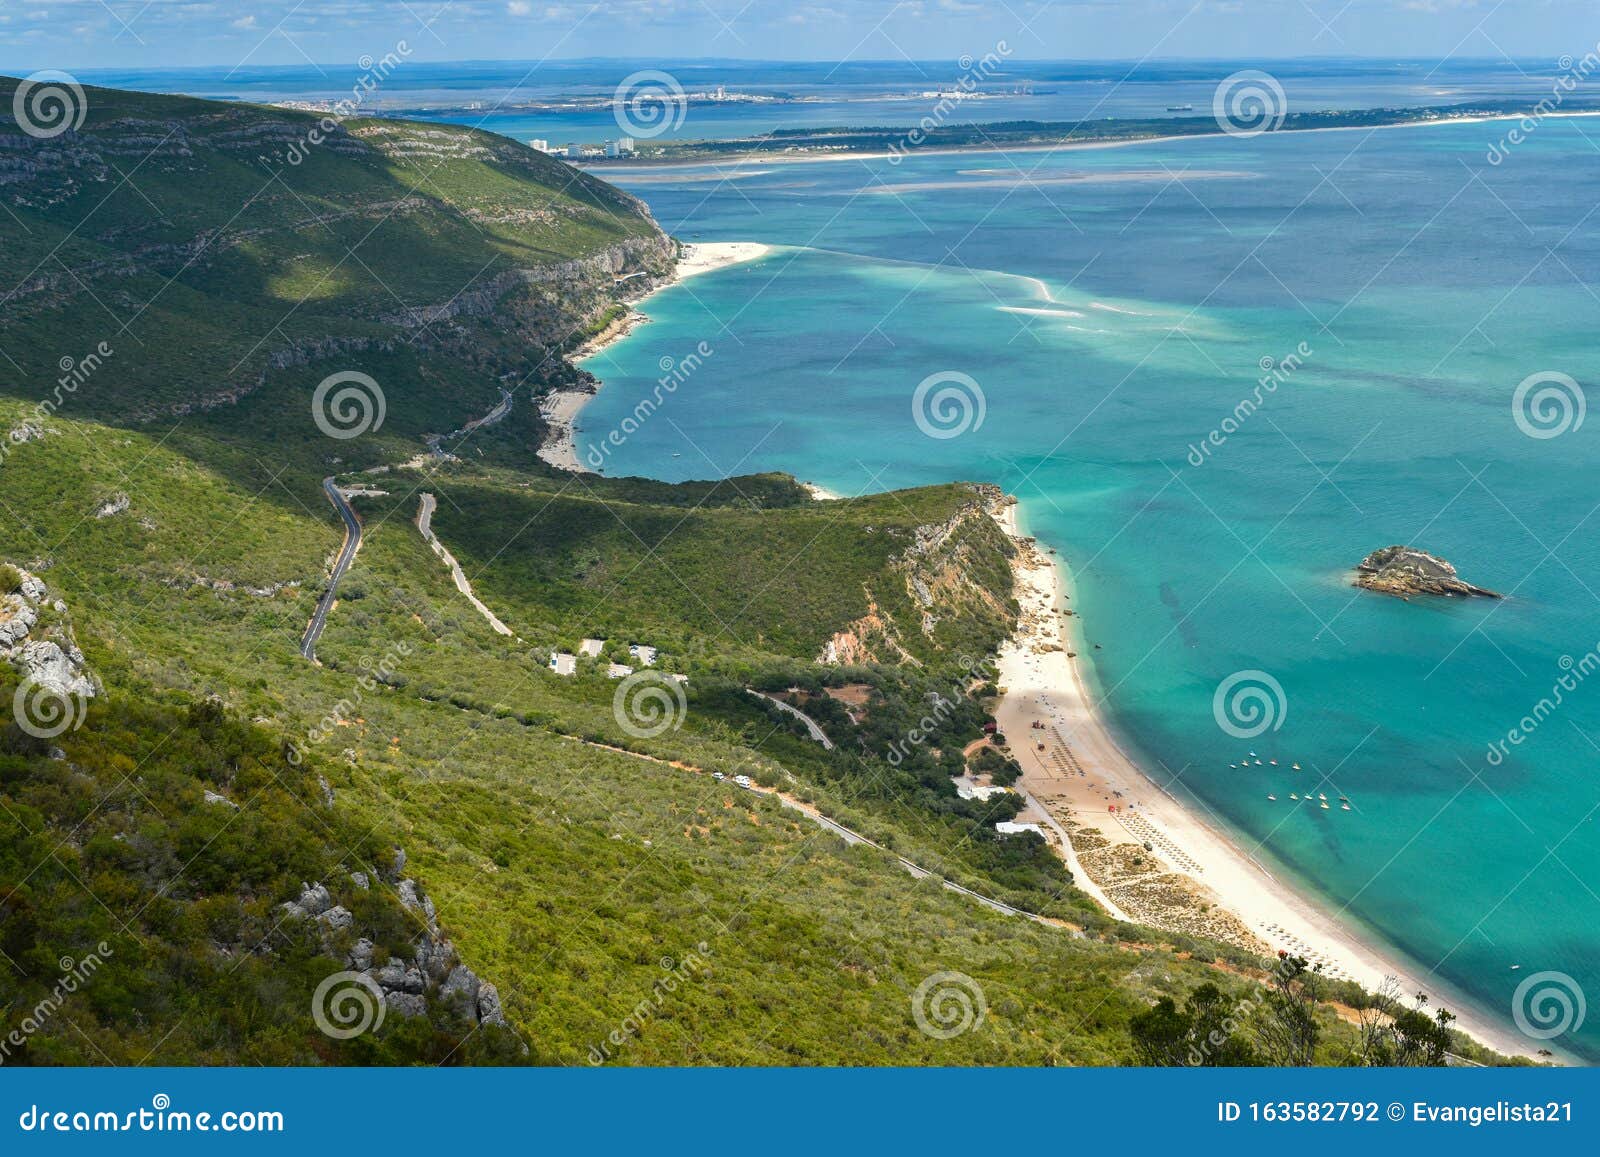 aerial view of arrabida beaches in setubal, portugal